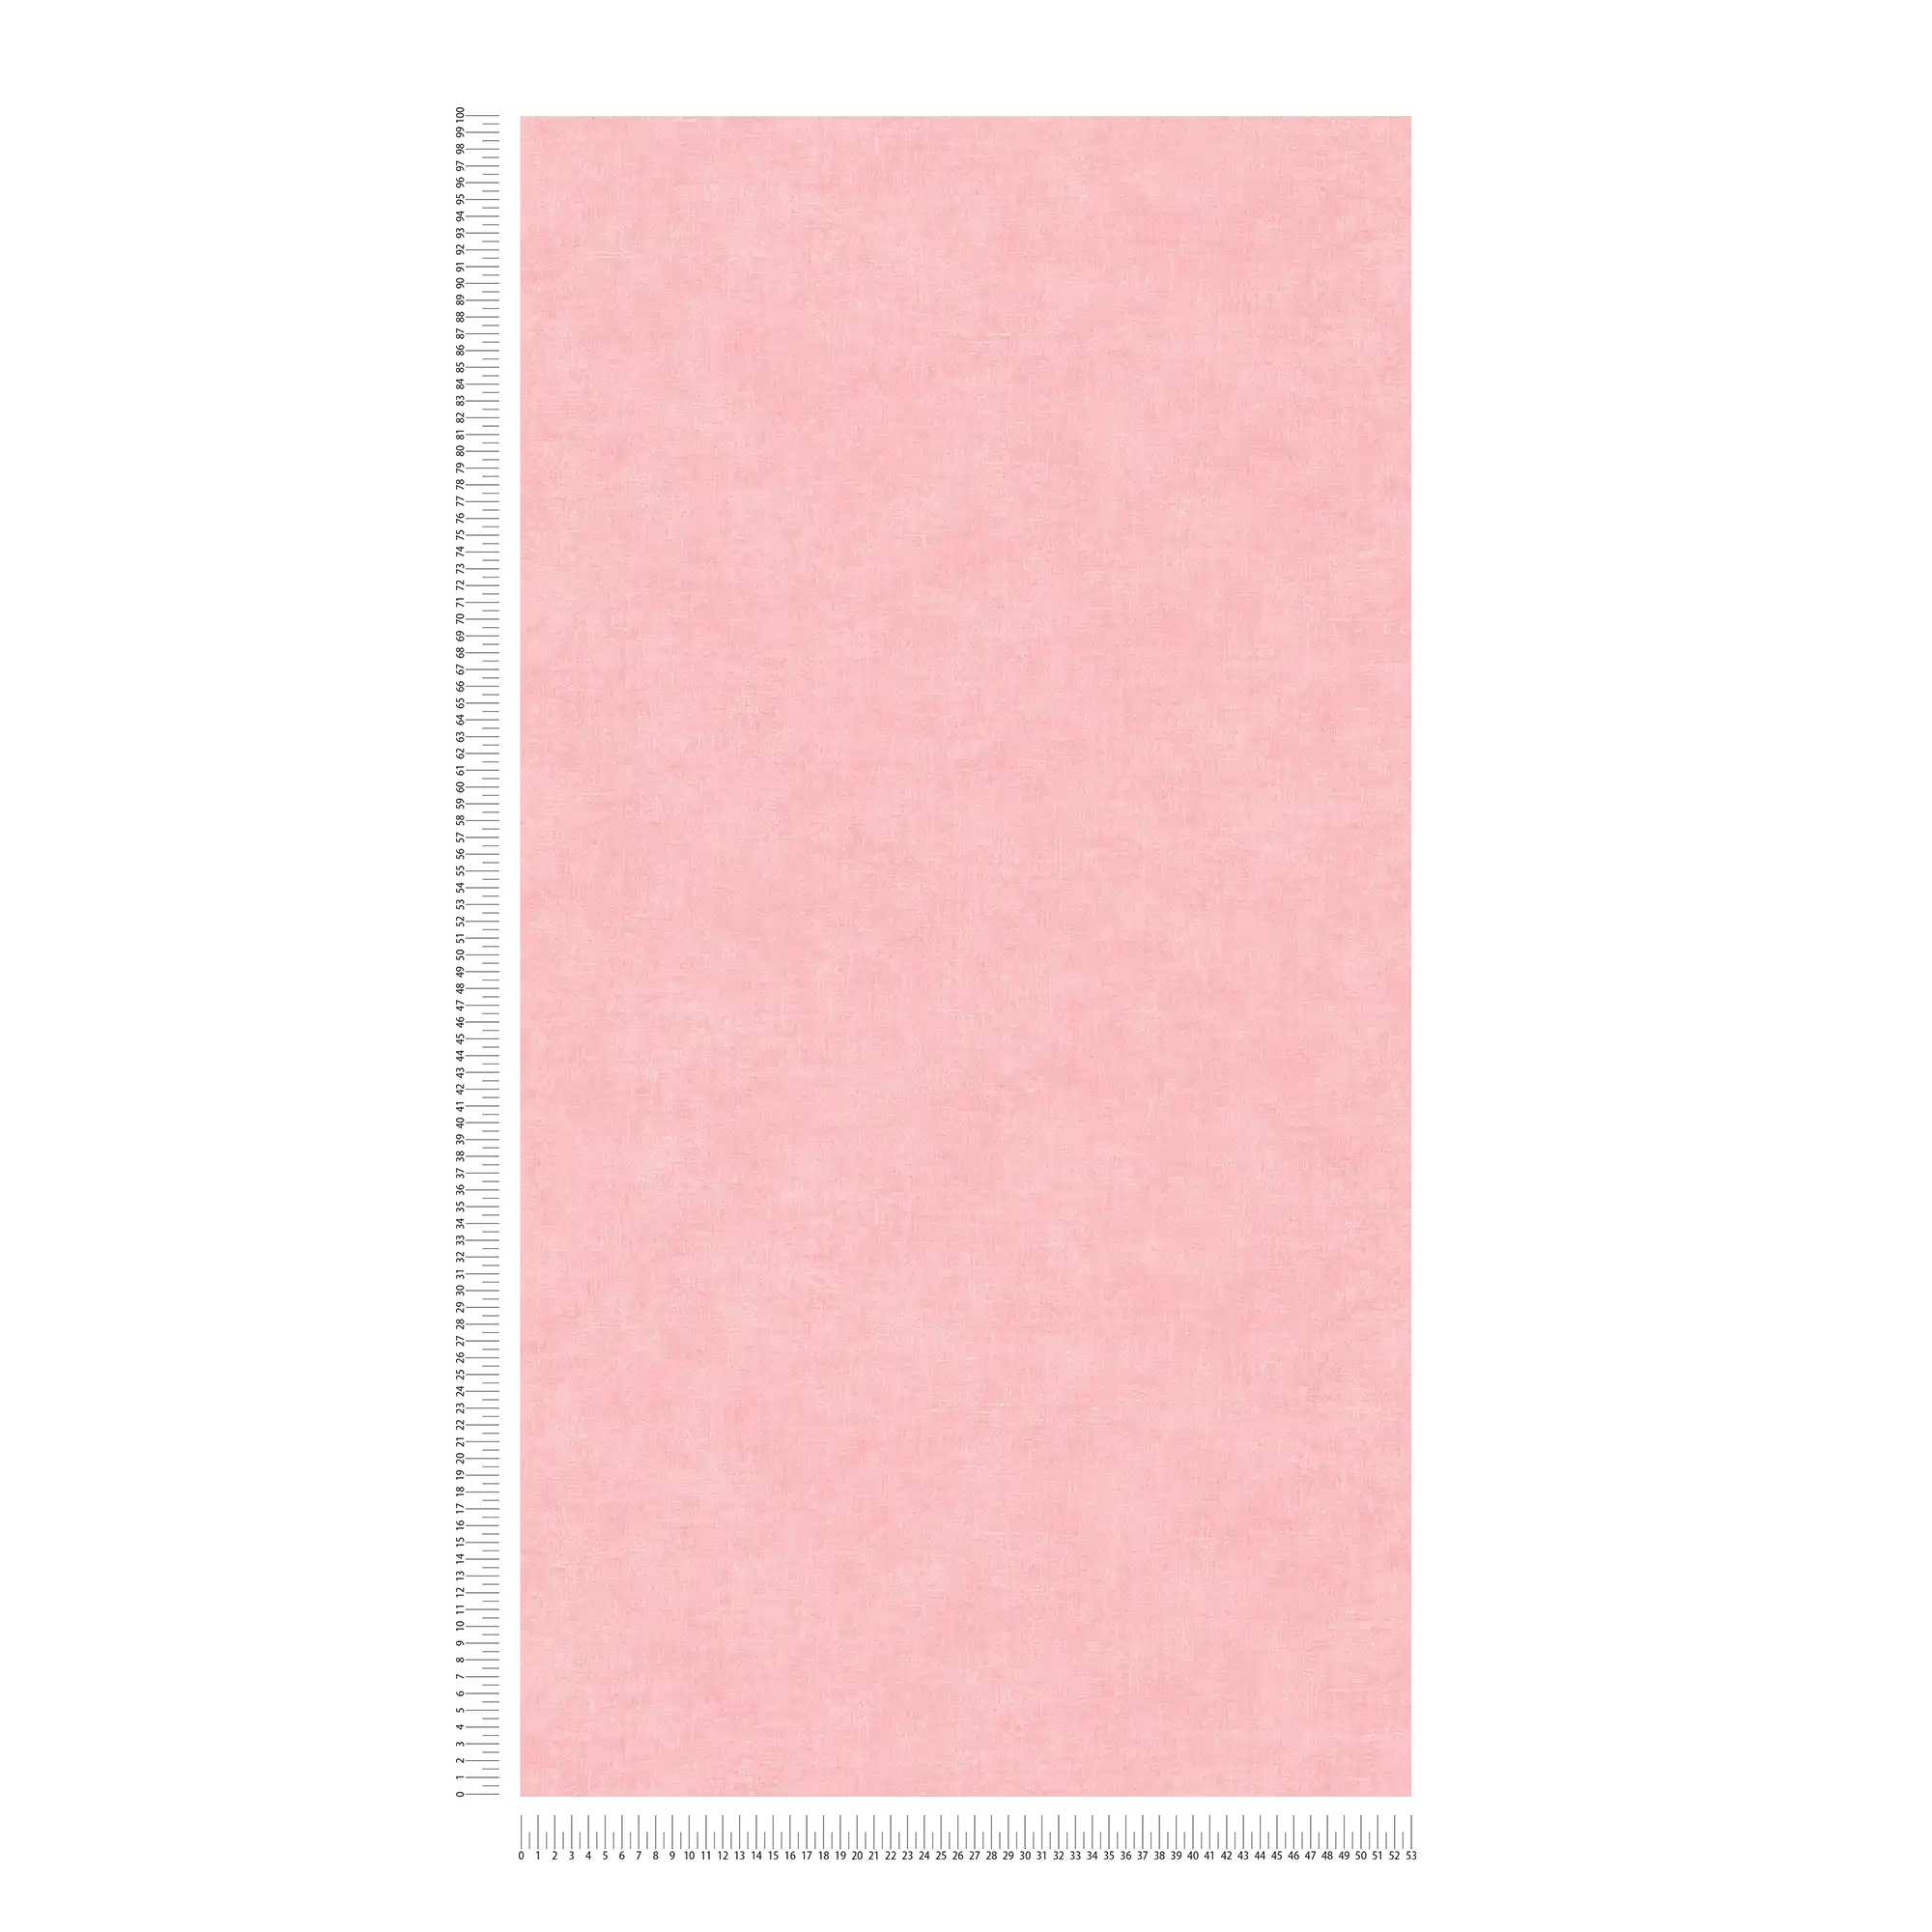             Pink wallpaper plain & matte with texture pattern
        